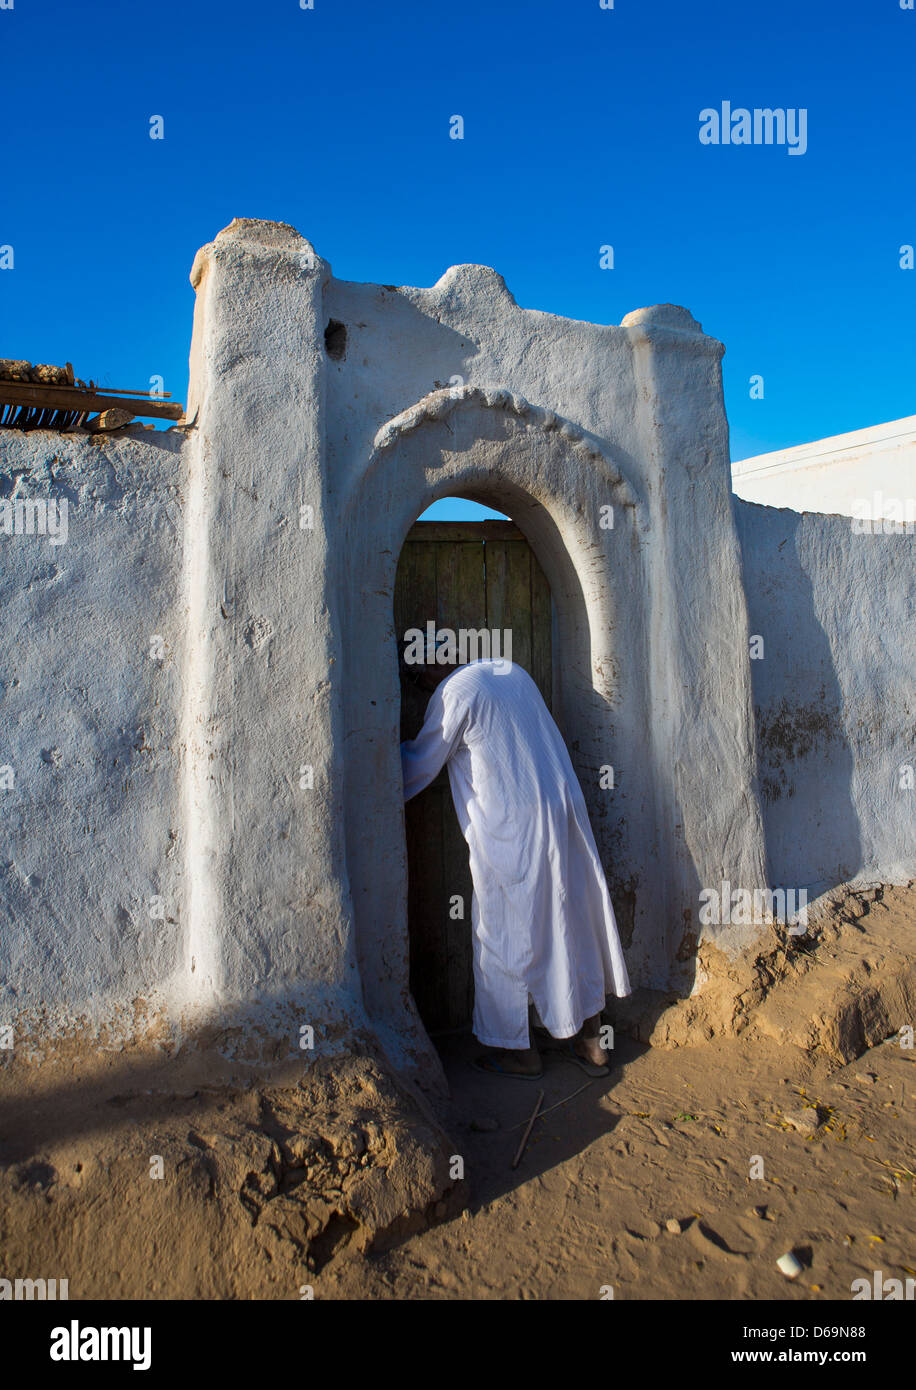 Traditional Nubian Architecture And Plasterwork Of A Fine Doorway, Tumbus,sudan Stock Photo